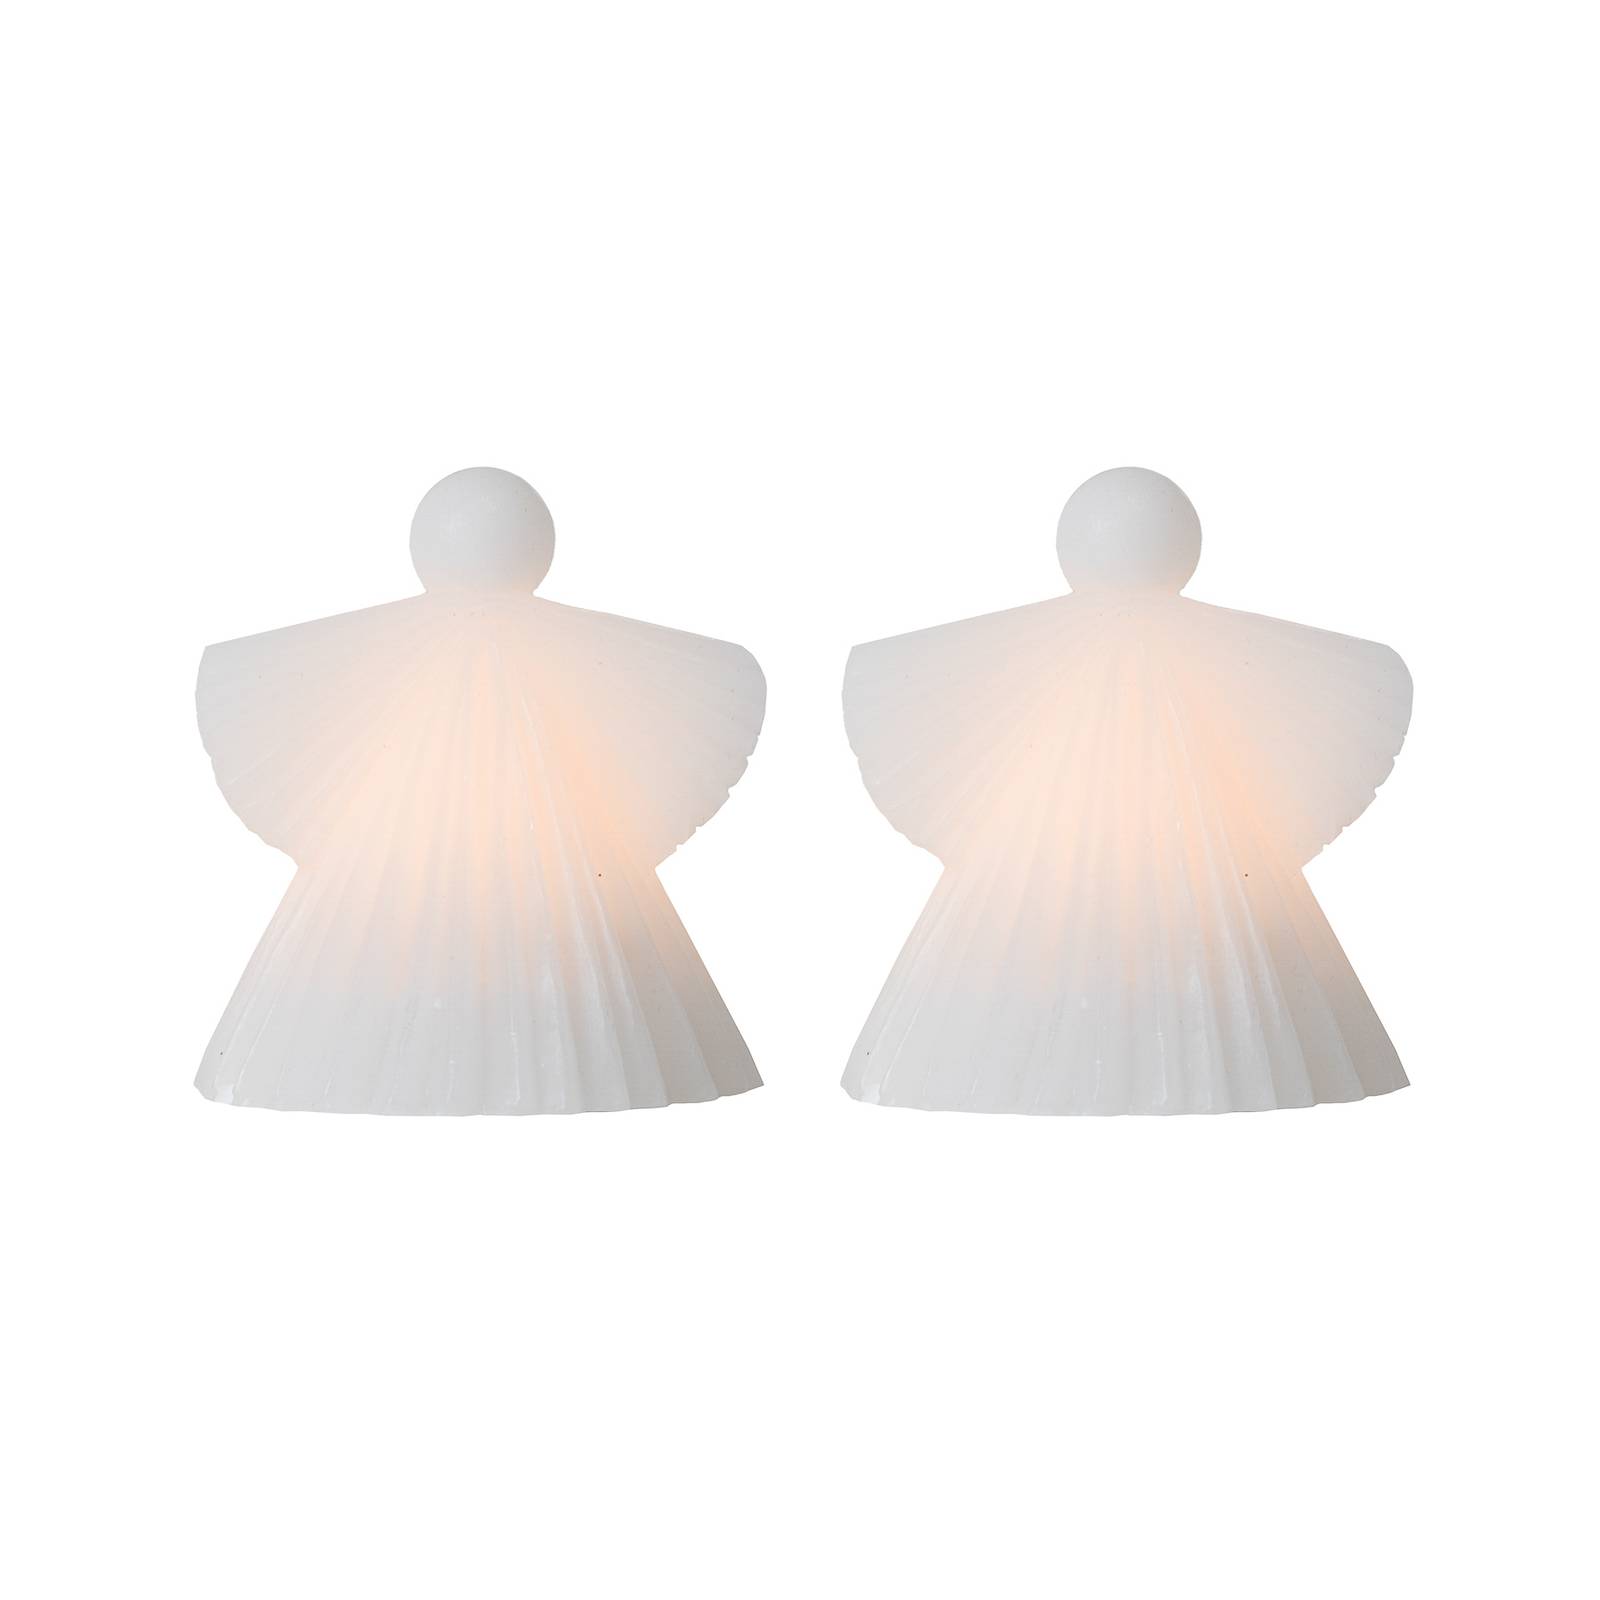 LED deco figura Asta, Angyal, viasz fehér, 10 cm 2